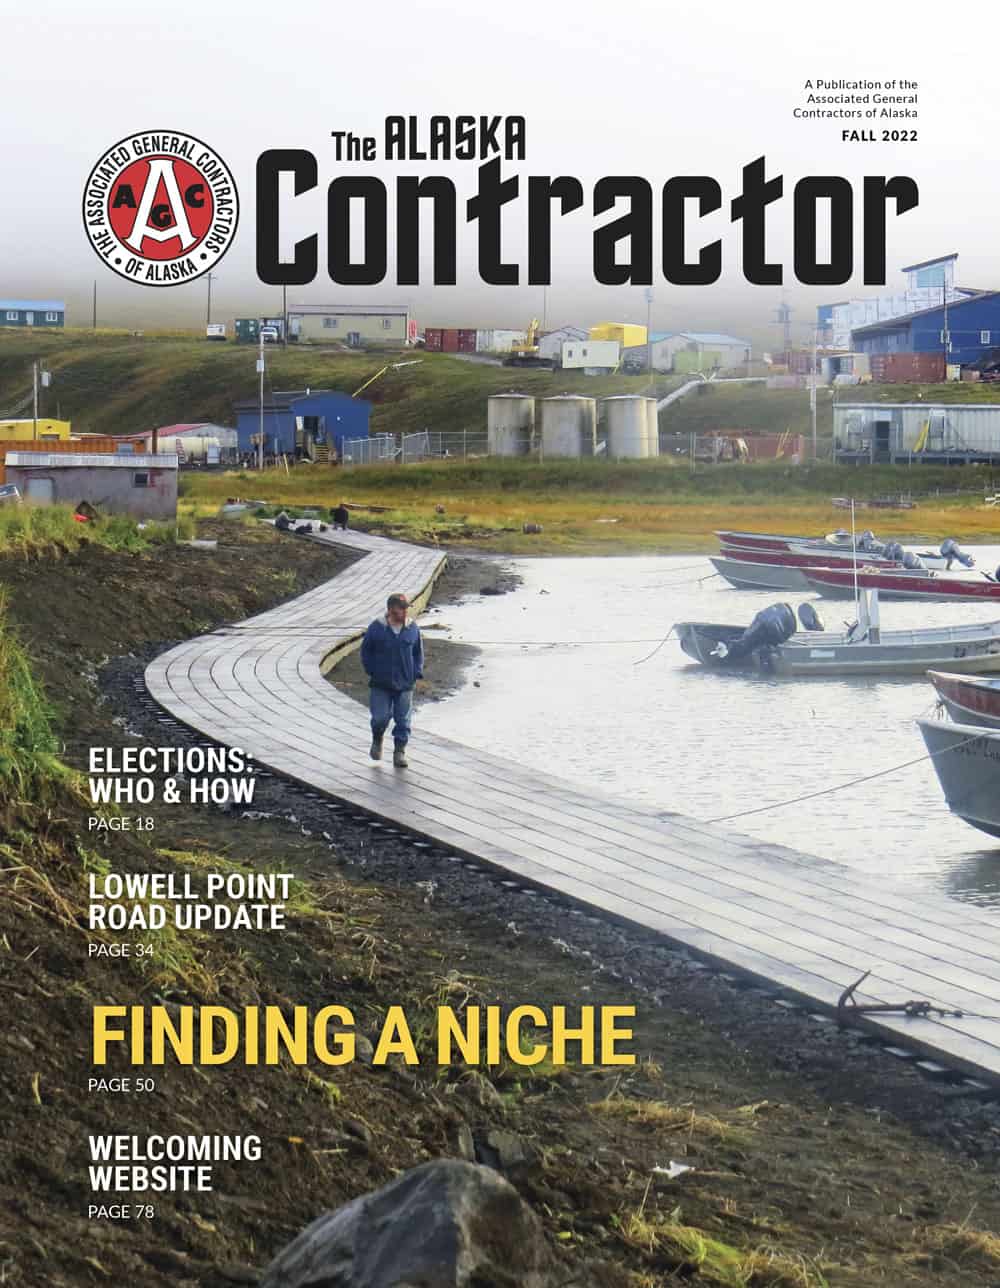 The Alaska Contractor Fall 2021 cover